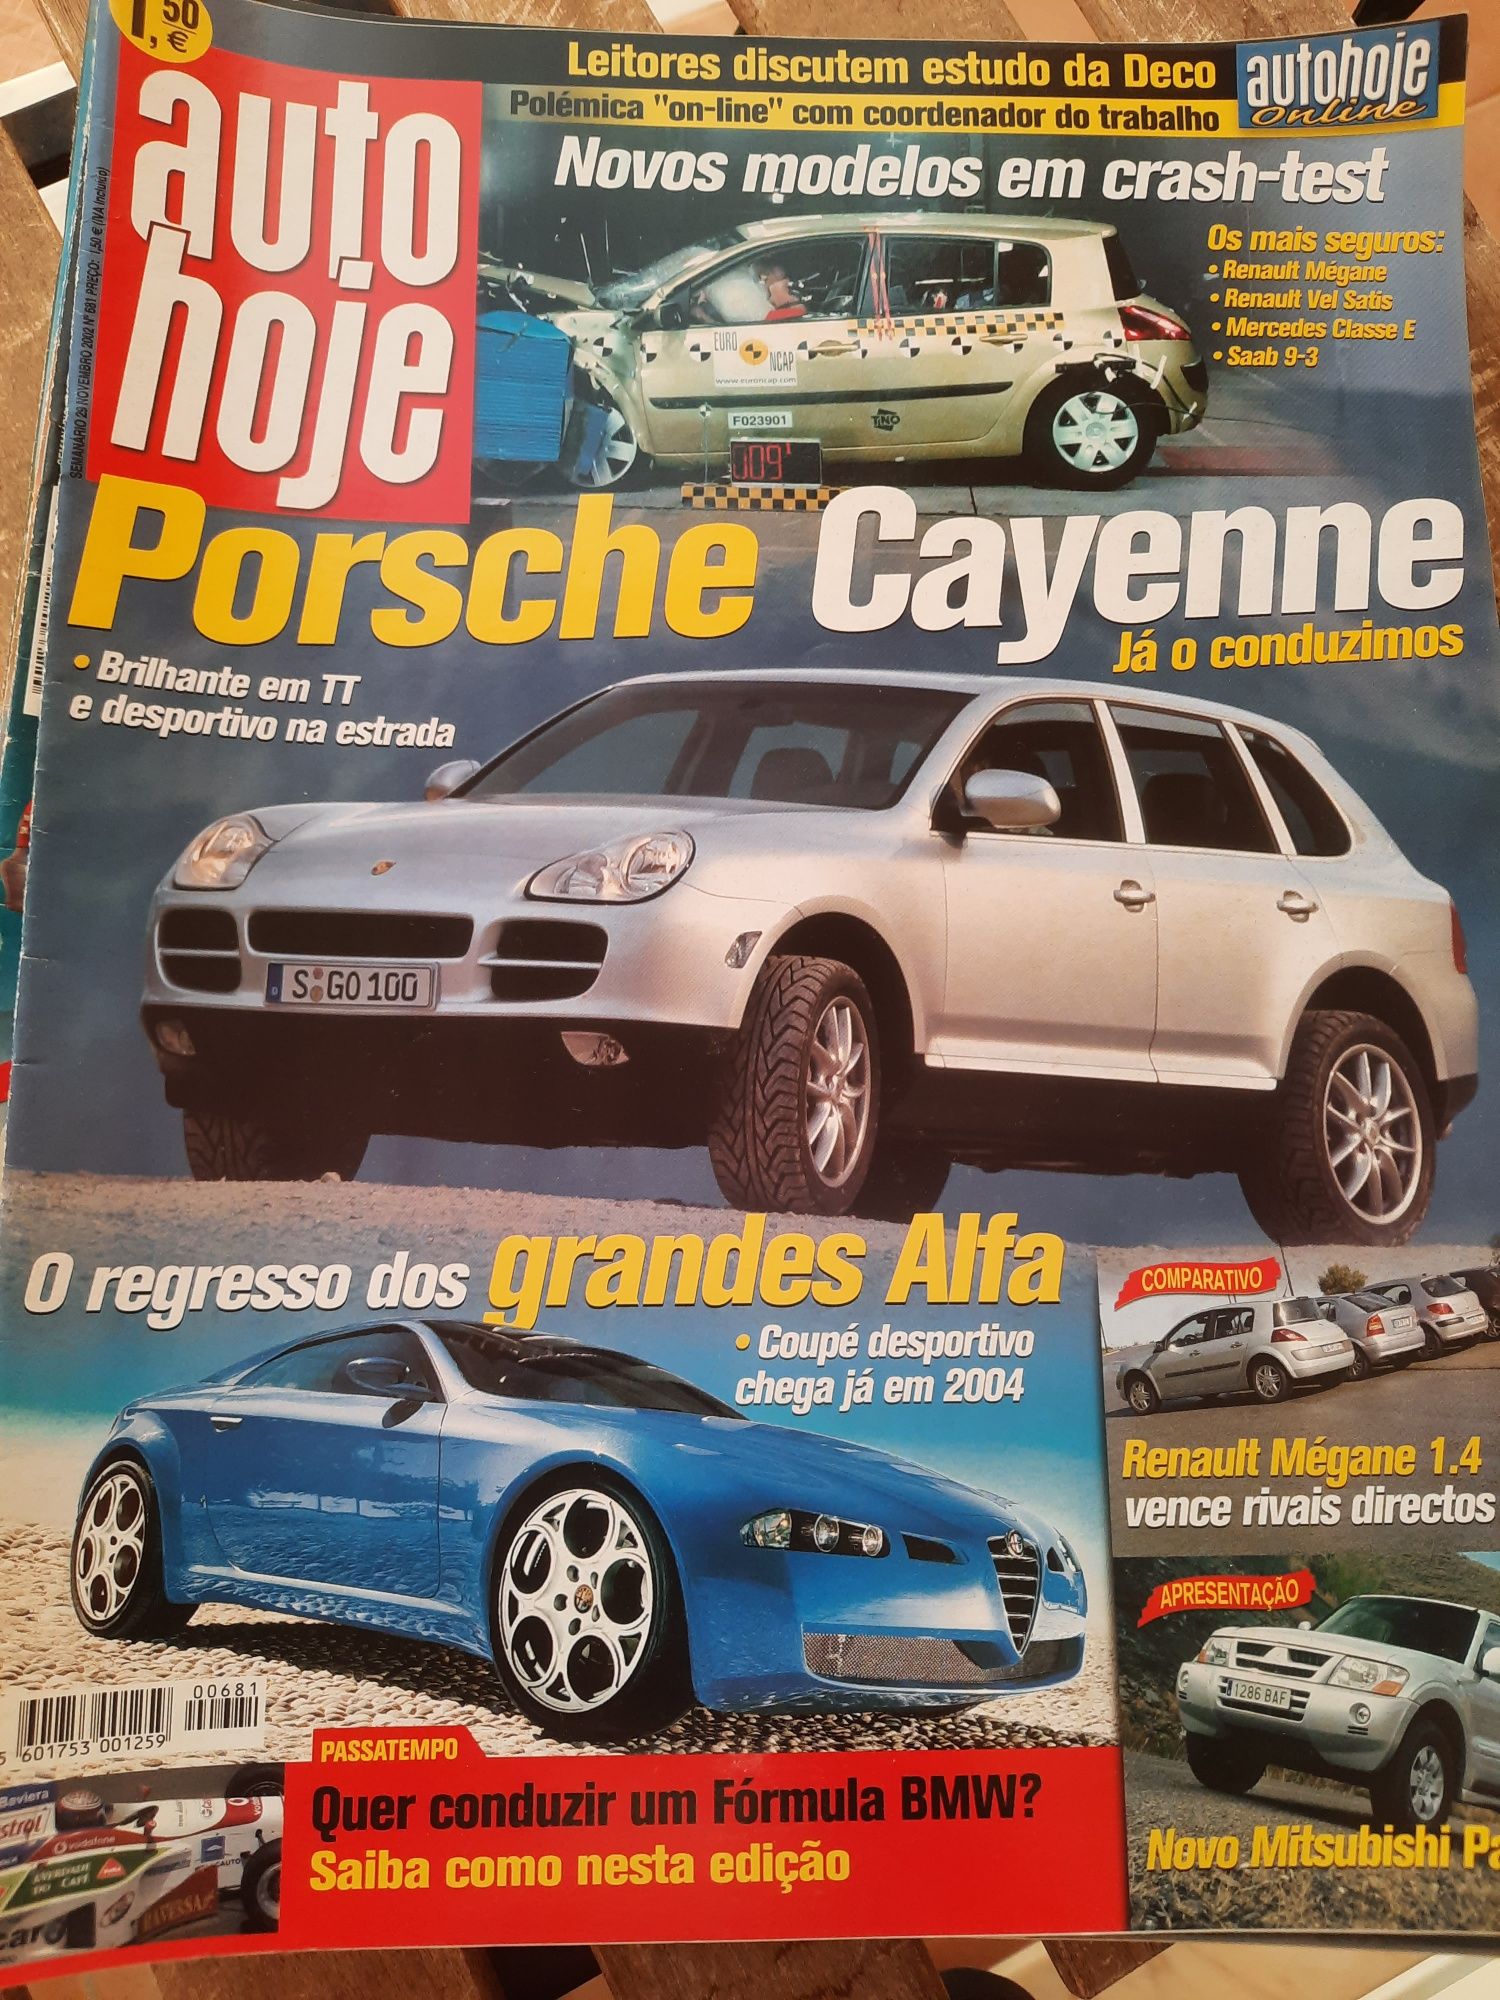 Revistas antigas "Auto Hoje"